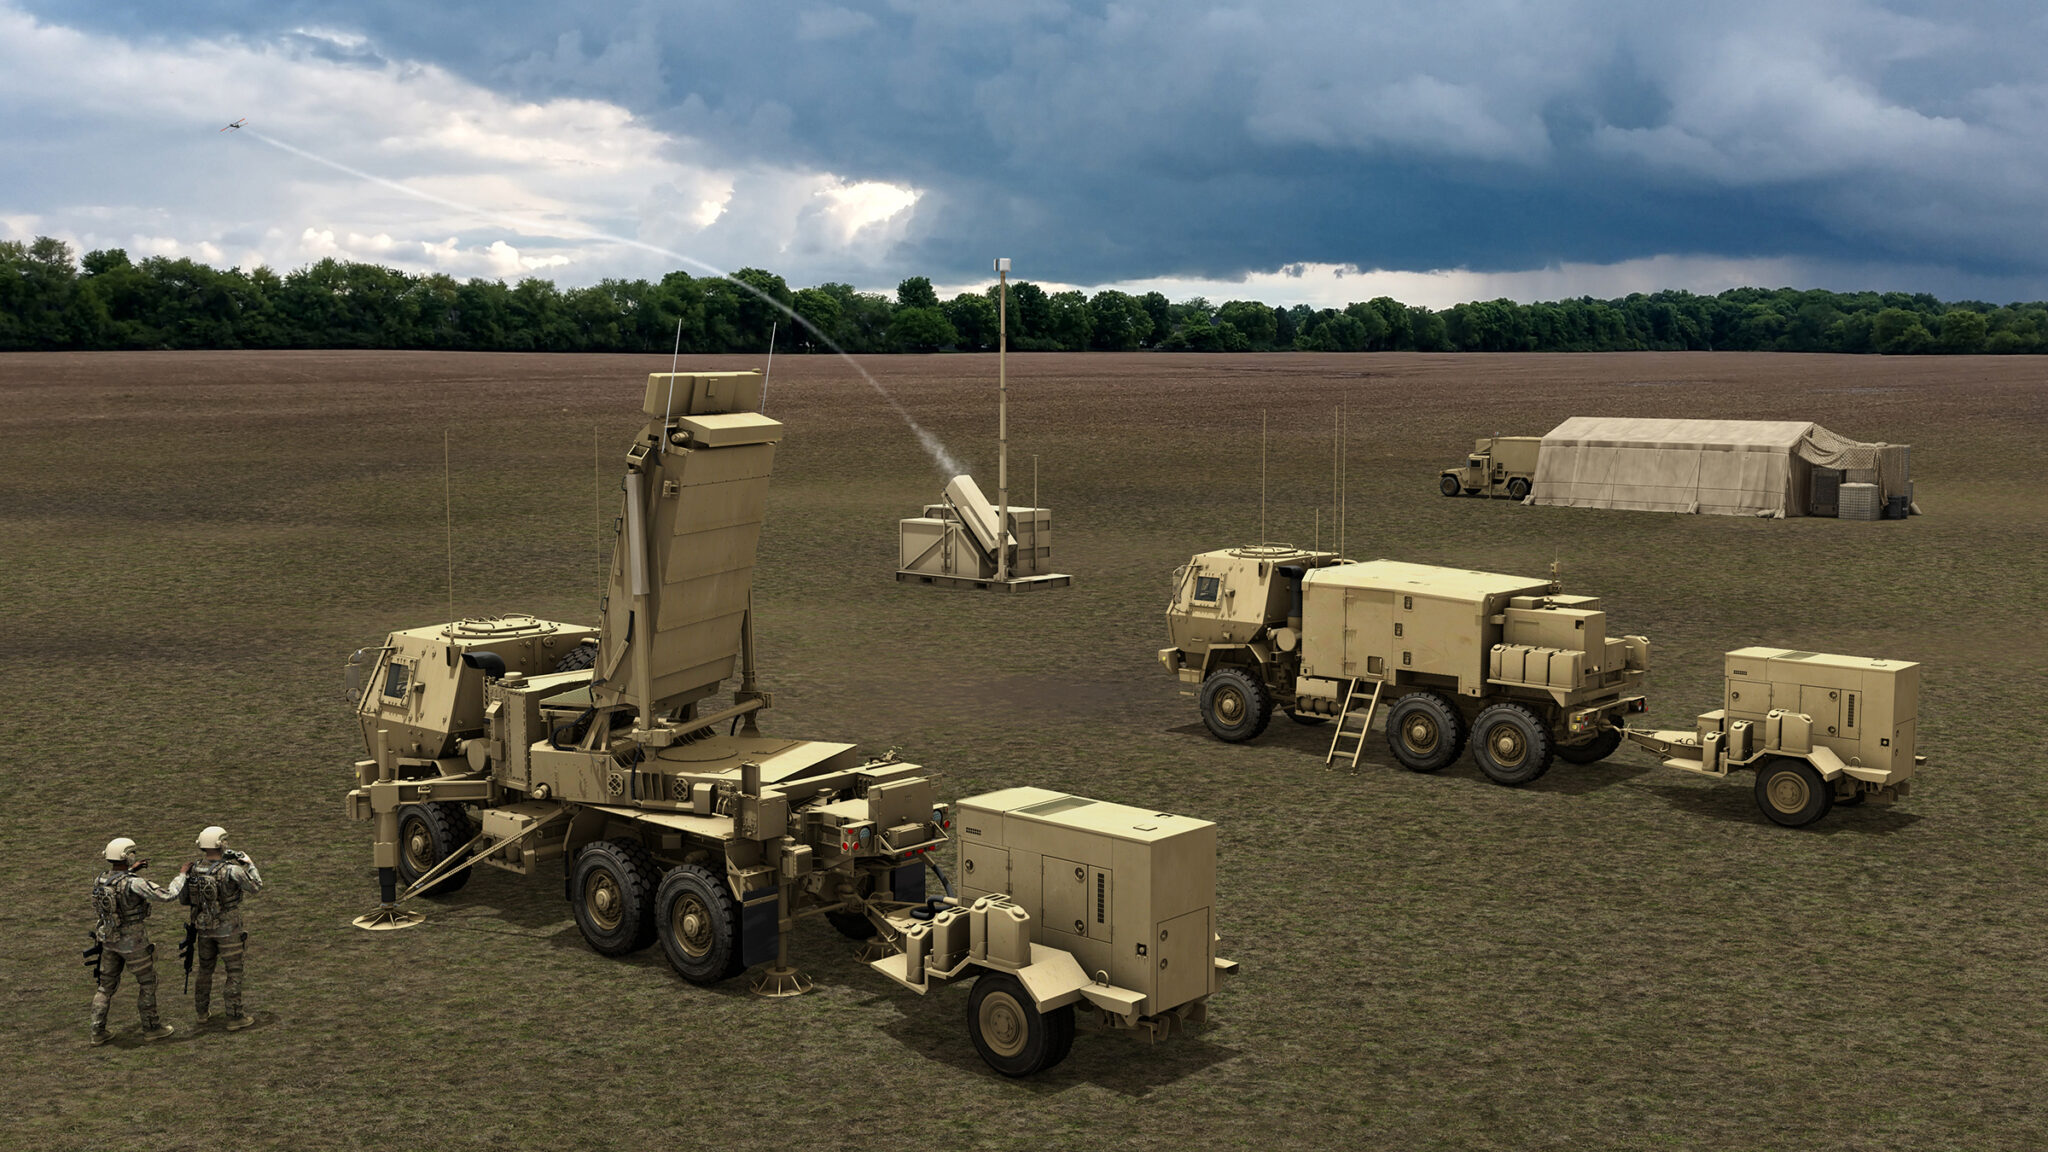 Us Army Demonstrates Latest Multi Mission Radar As Anti Drone Capability